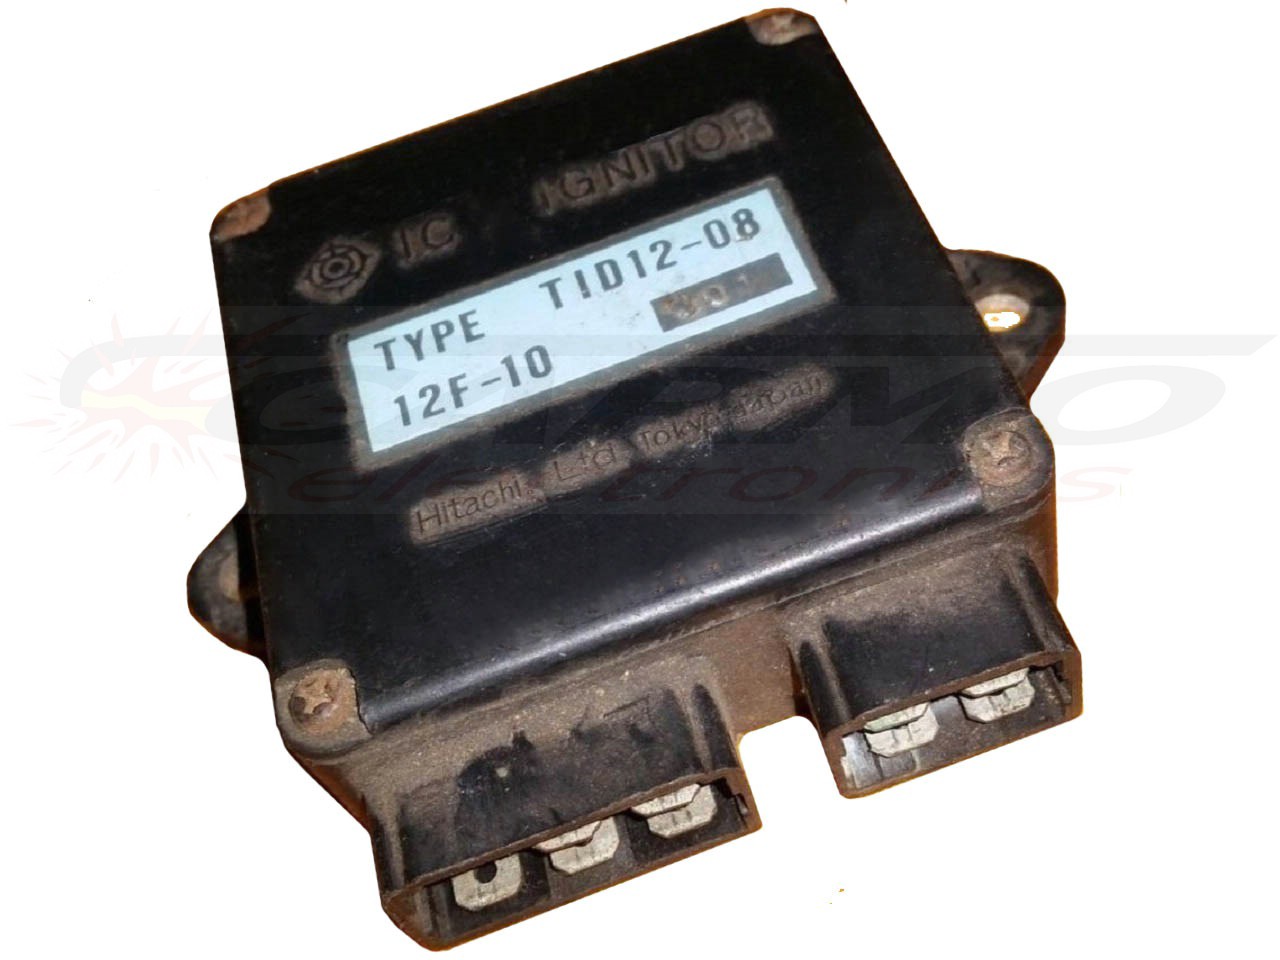 XS400 DOHC igniter ignition module CDI Box (TID12-08, 12F-10)